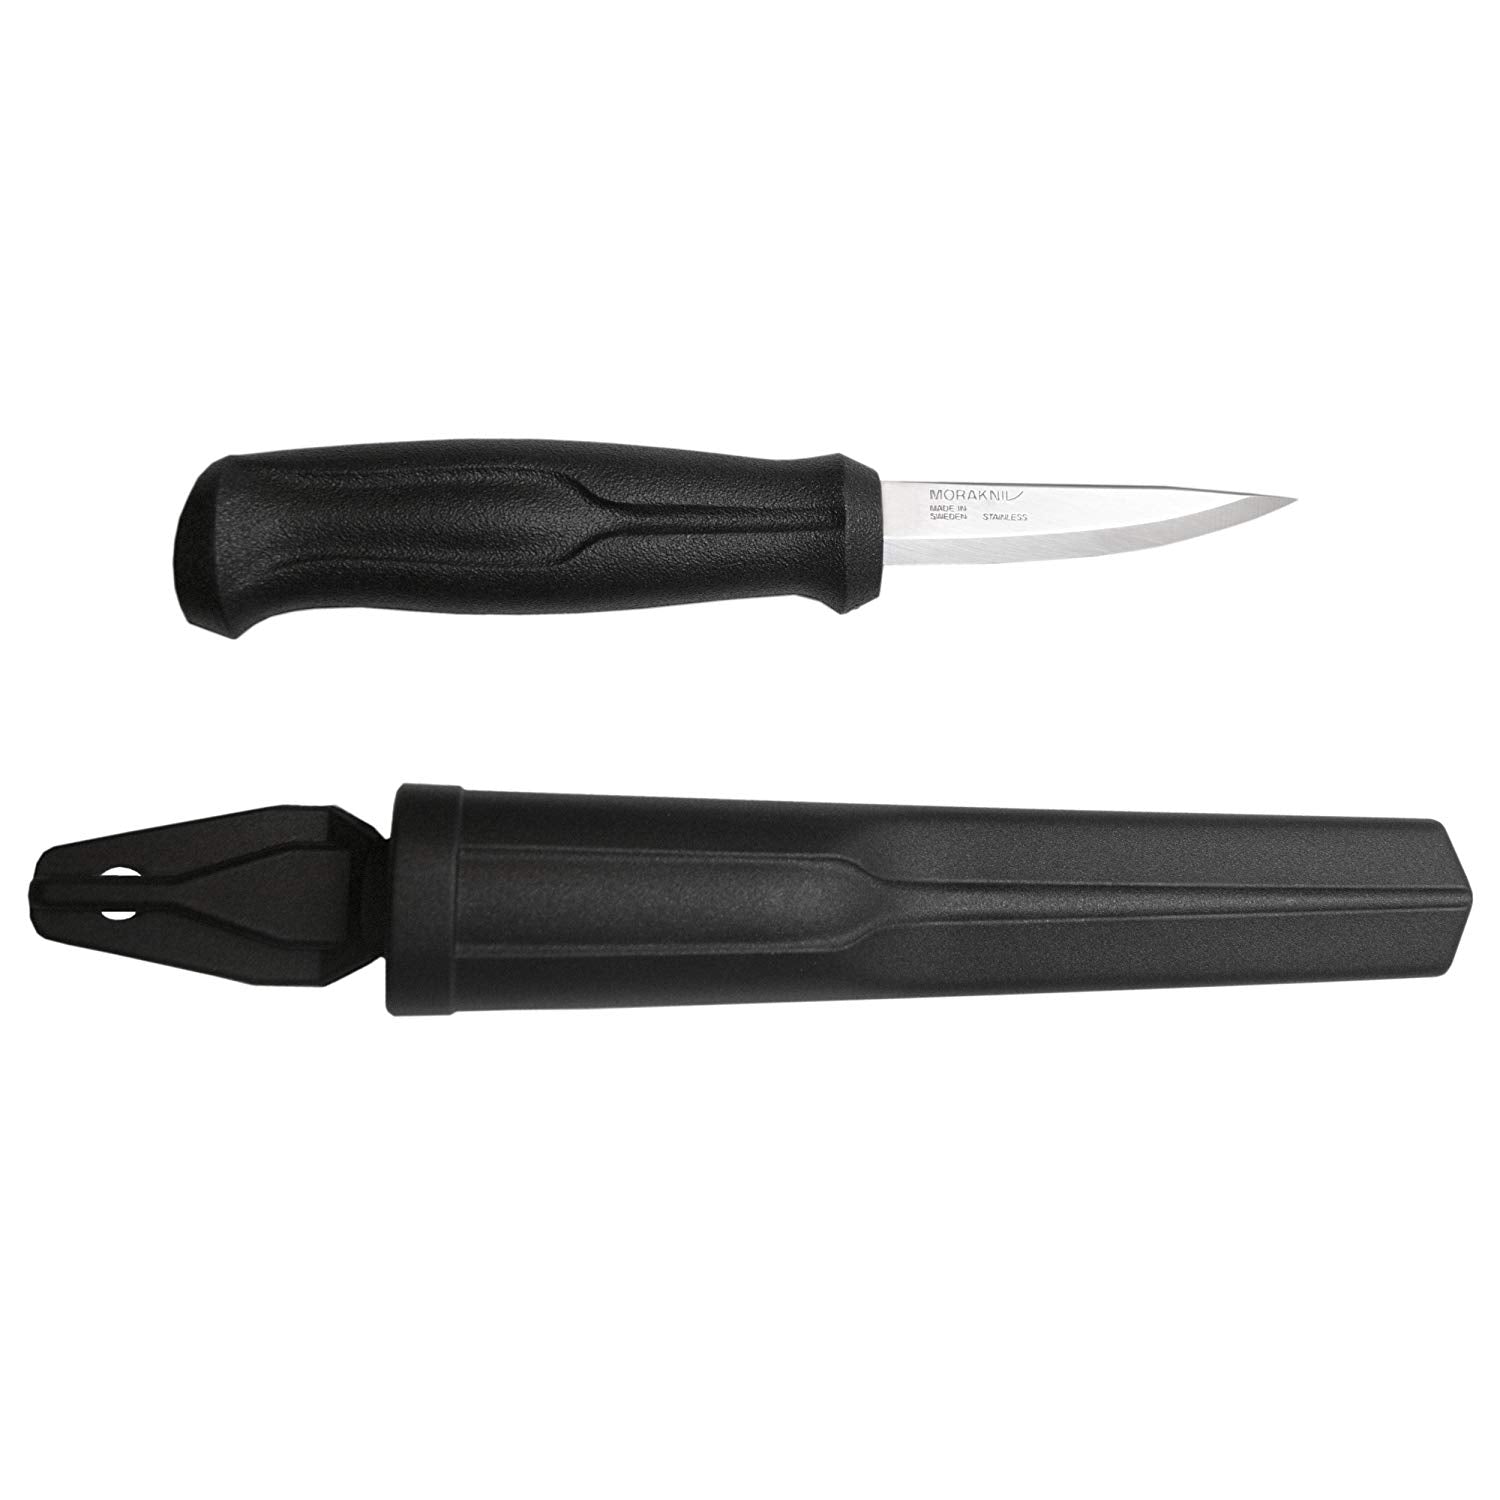 Mora Carving Basic 12658 wood carving knife  Advantageously shopping at